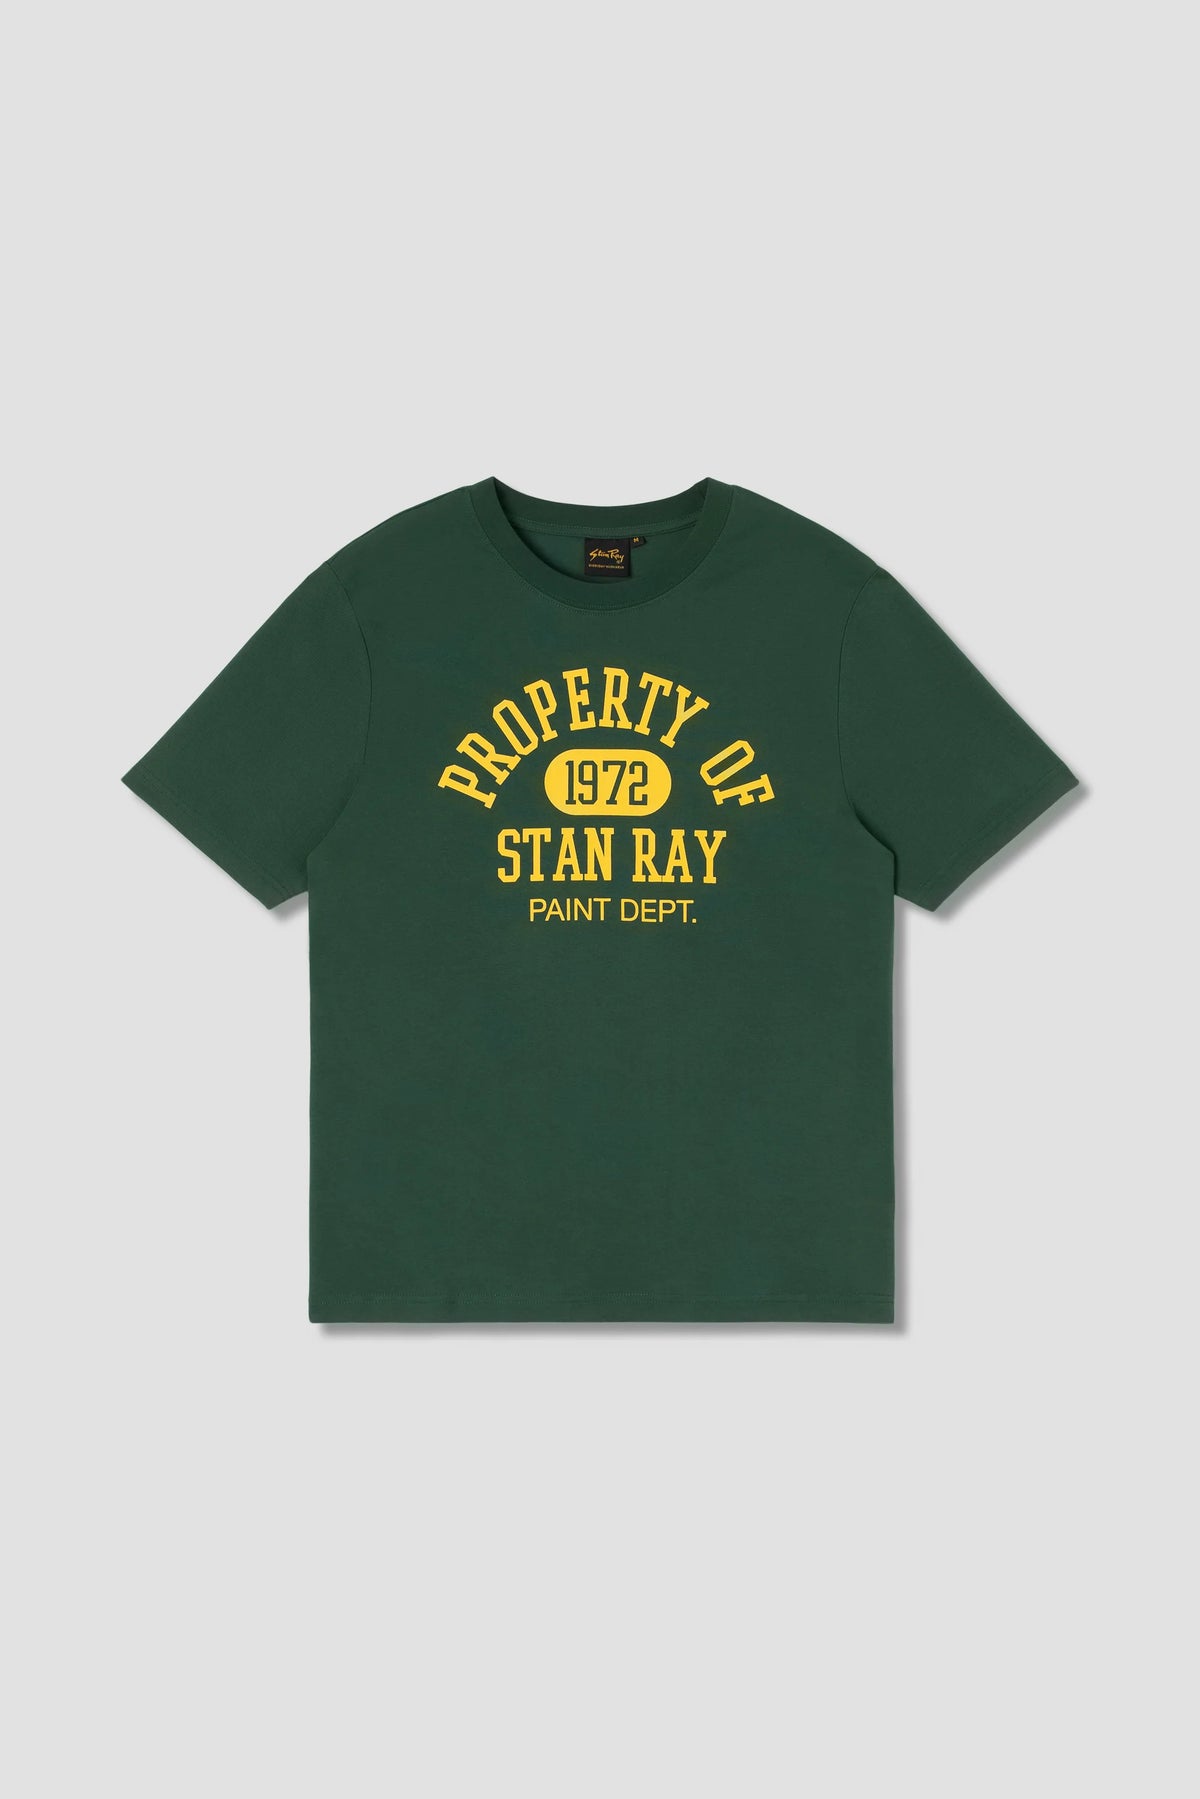 STAN RAY Paint Department T-Shirt - Racing Green